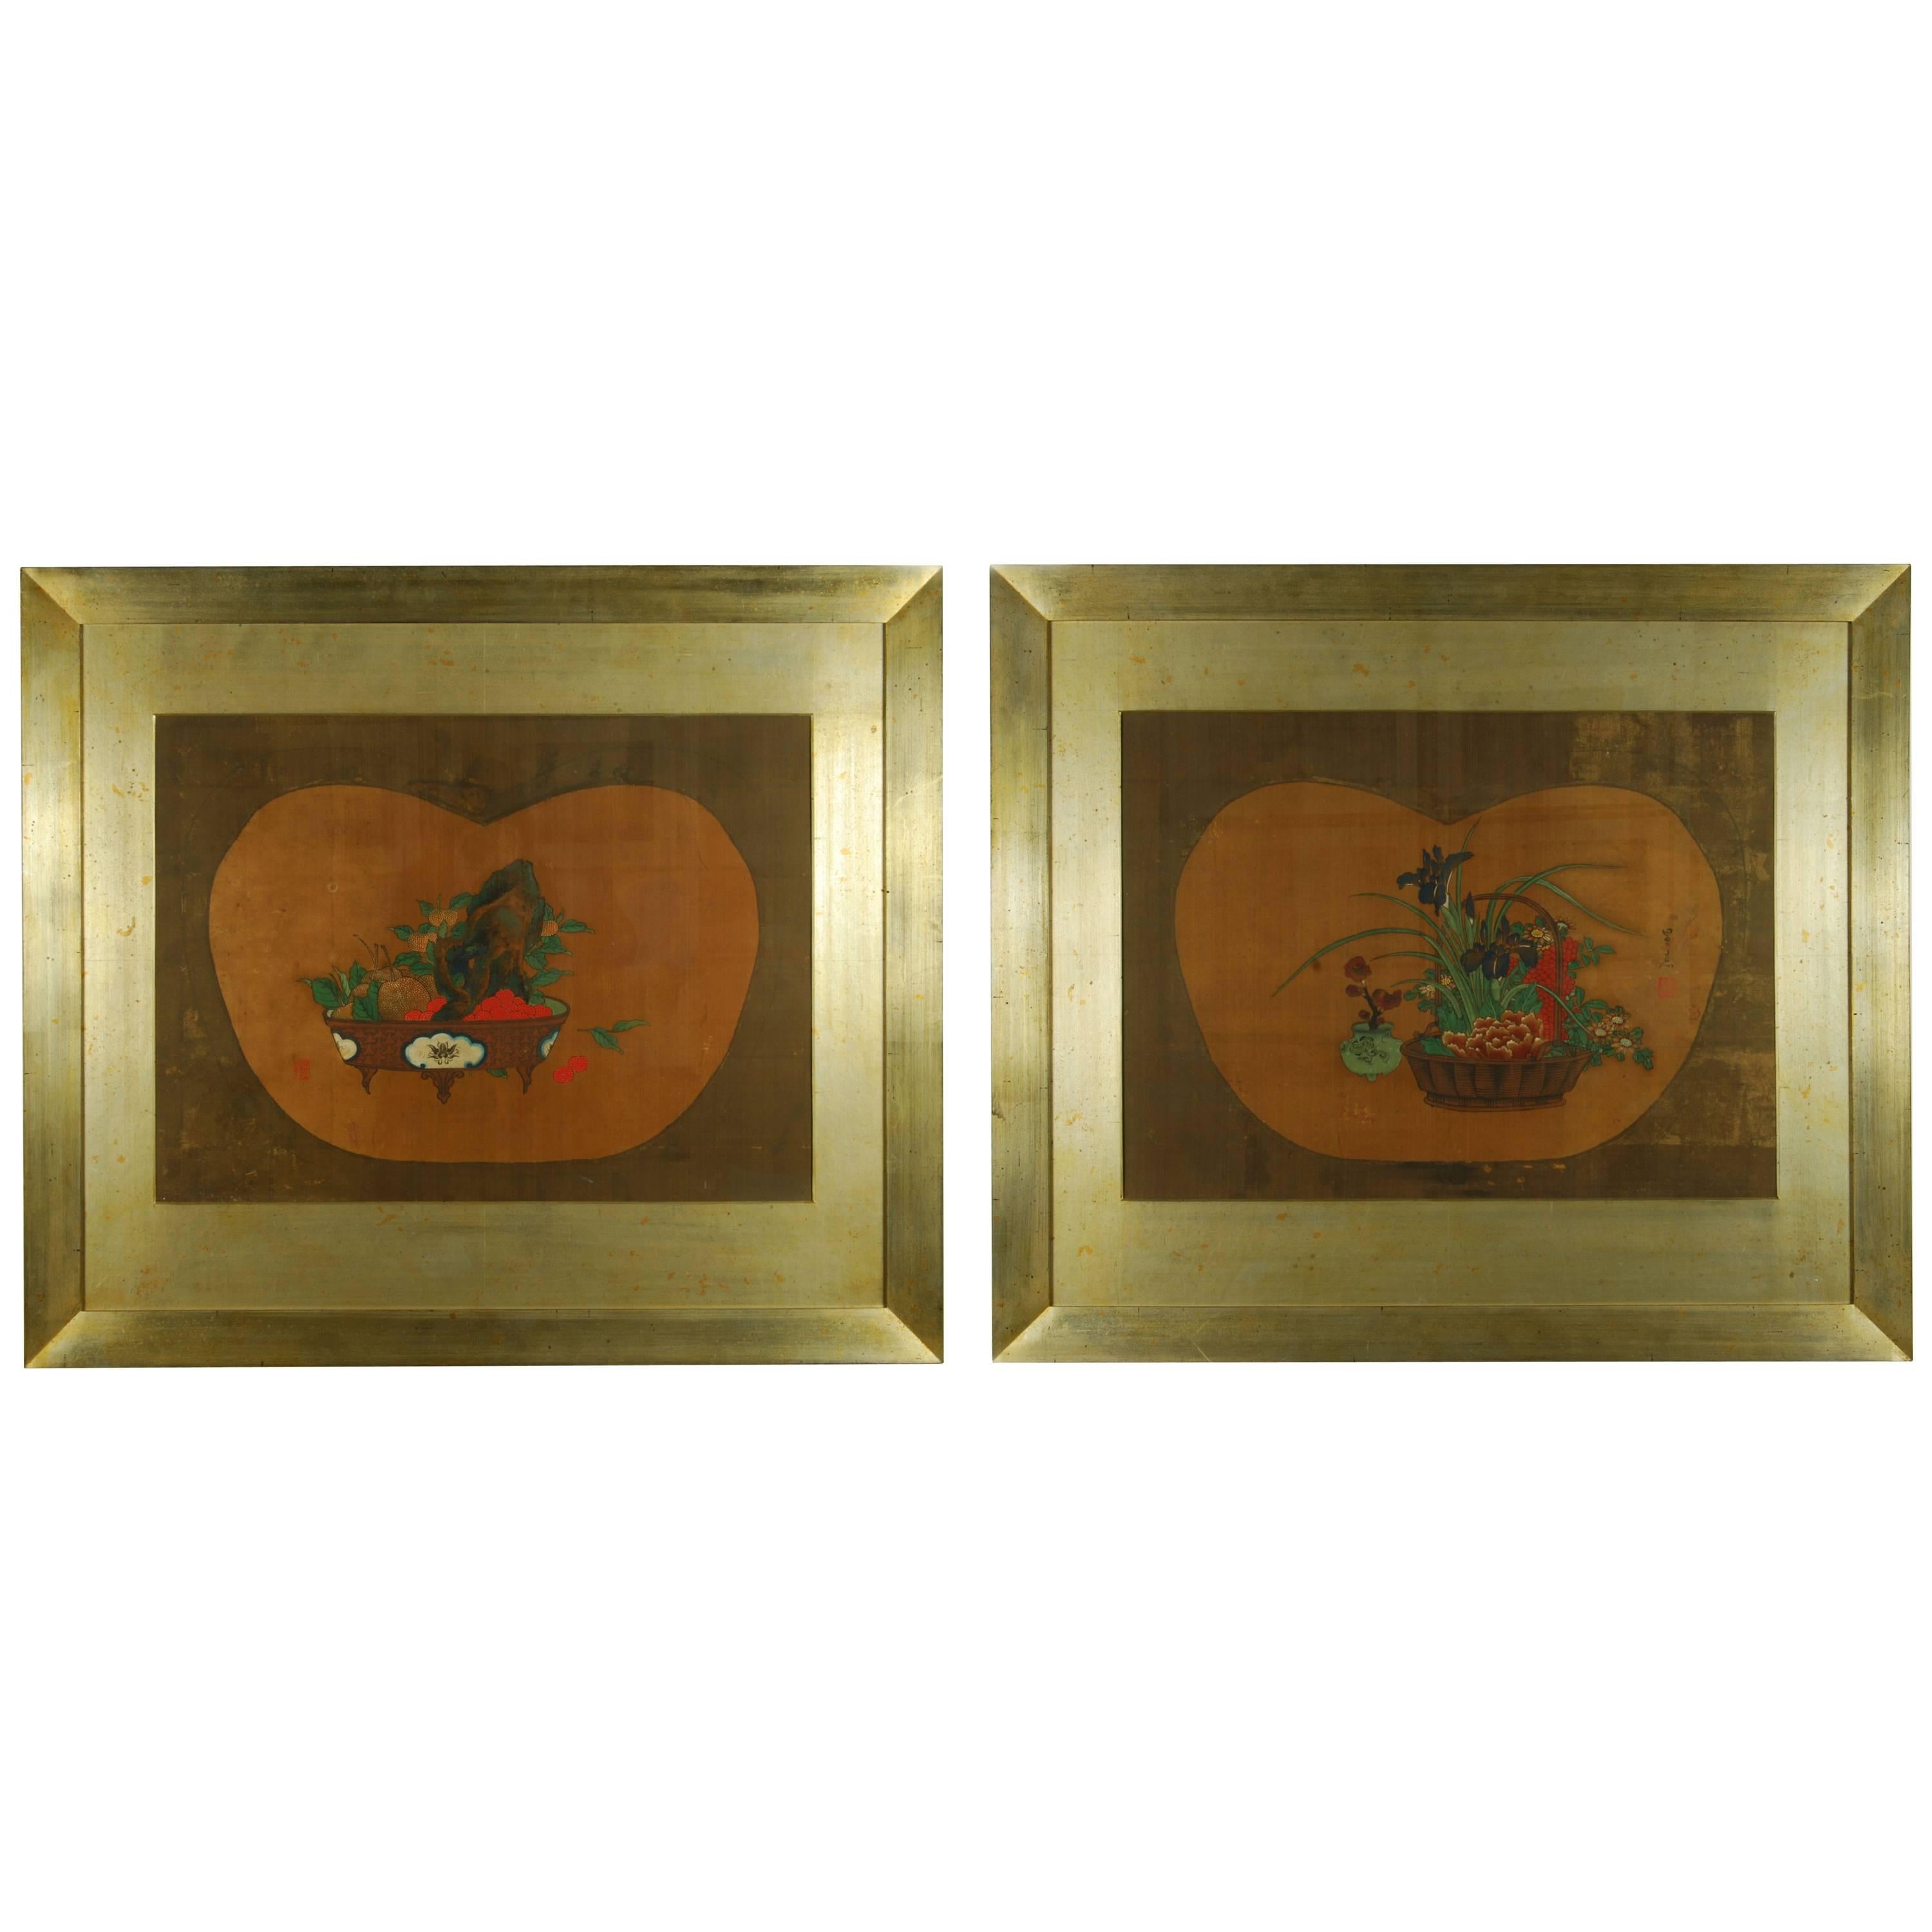 Pair of Antique Japanese Flower Paintings by Yanagisawa Kien, circa 18th Century